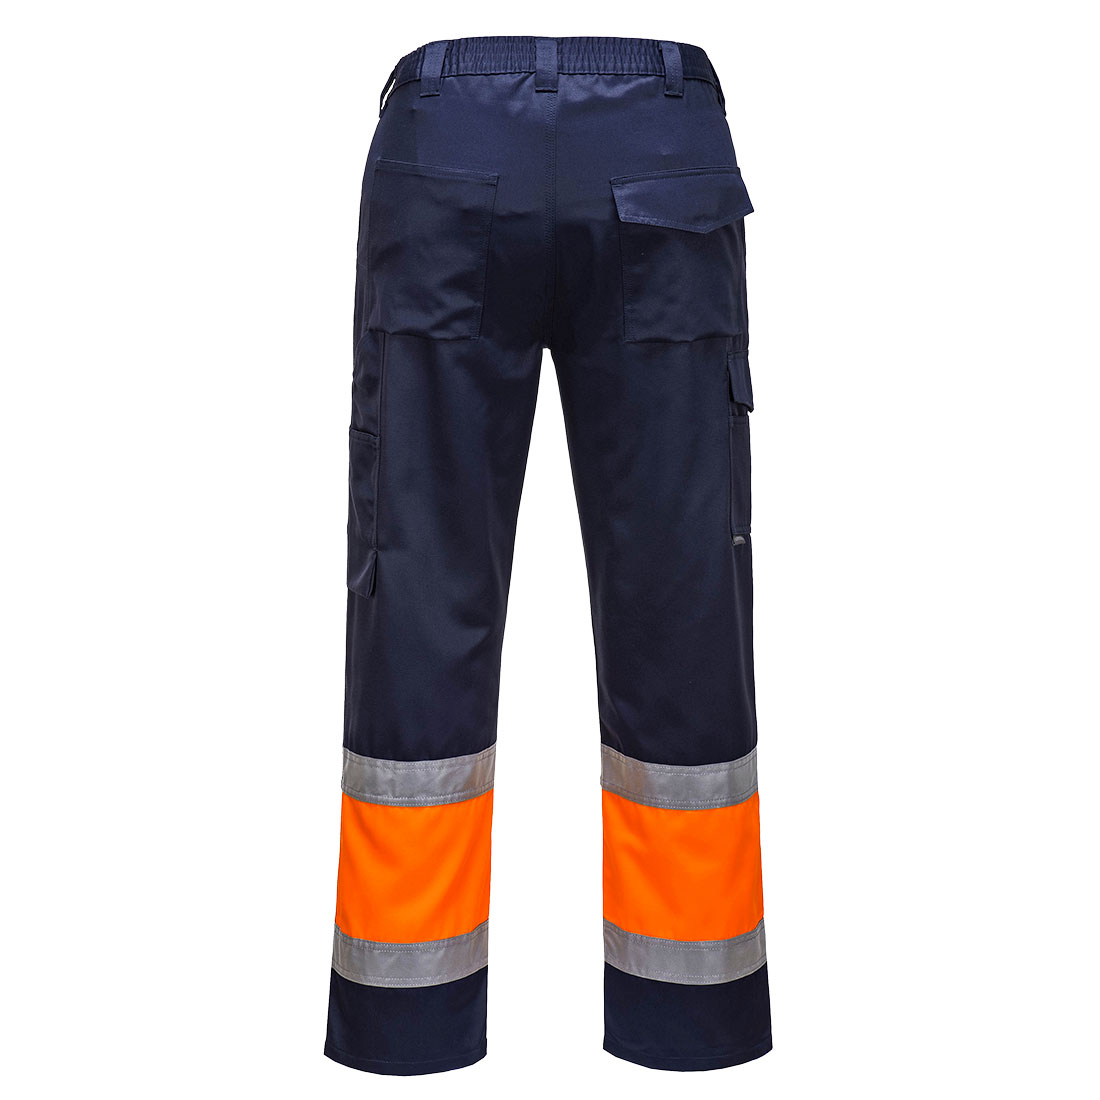 pantalon-azul-naranja-alta-visibilidad-con-cinta-reflectiva-espalda-E049-cental-de-suministrosgs.jpg